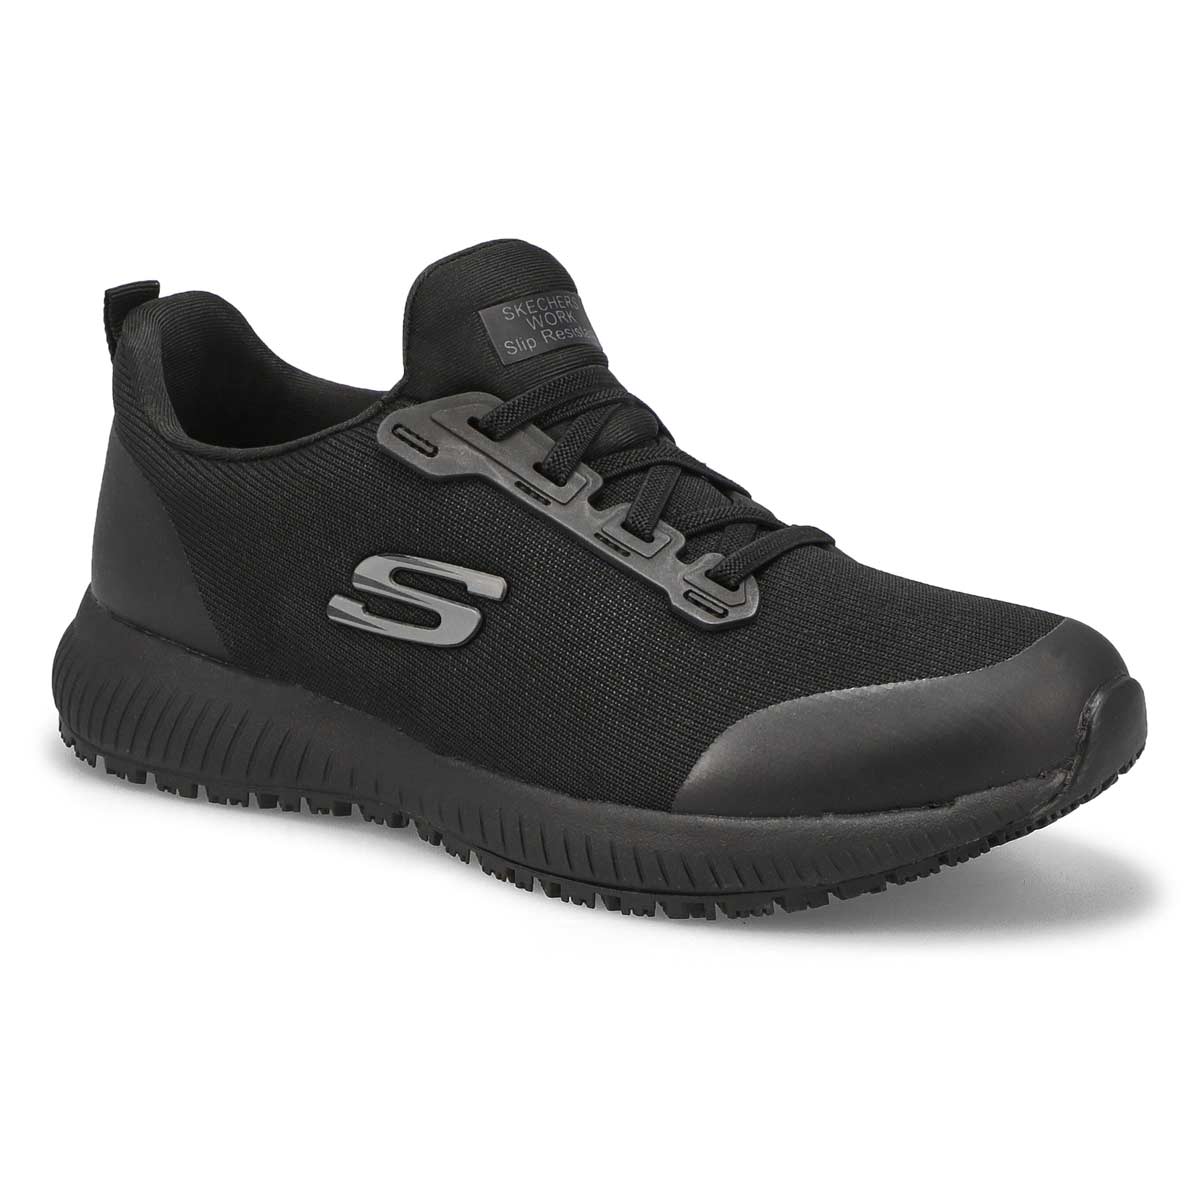 Skechers Ladies' Non-Slip Shoe